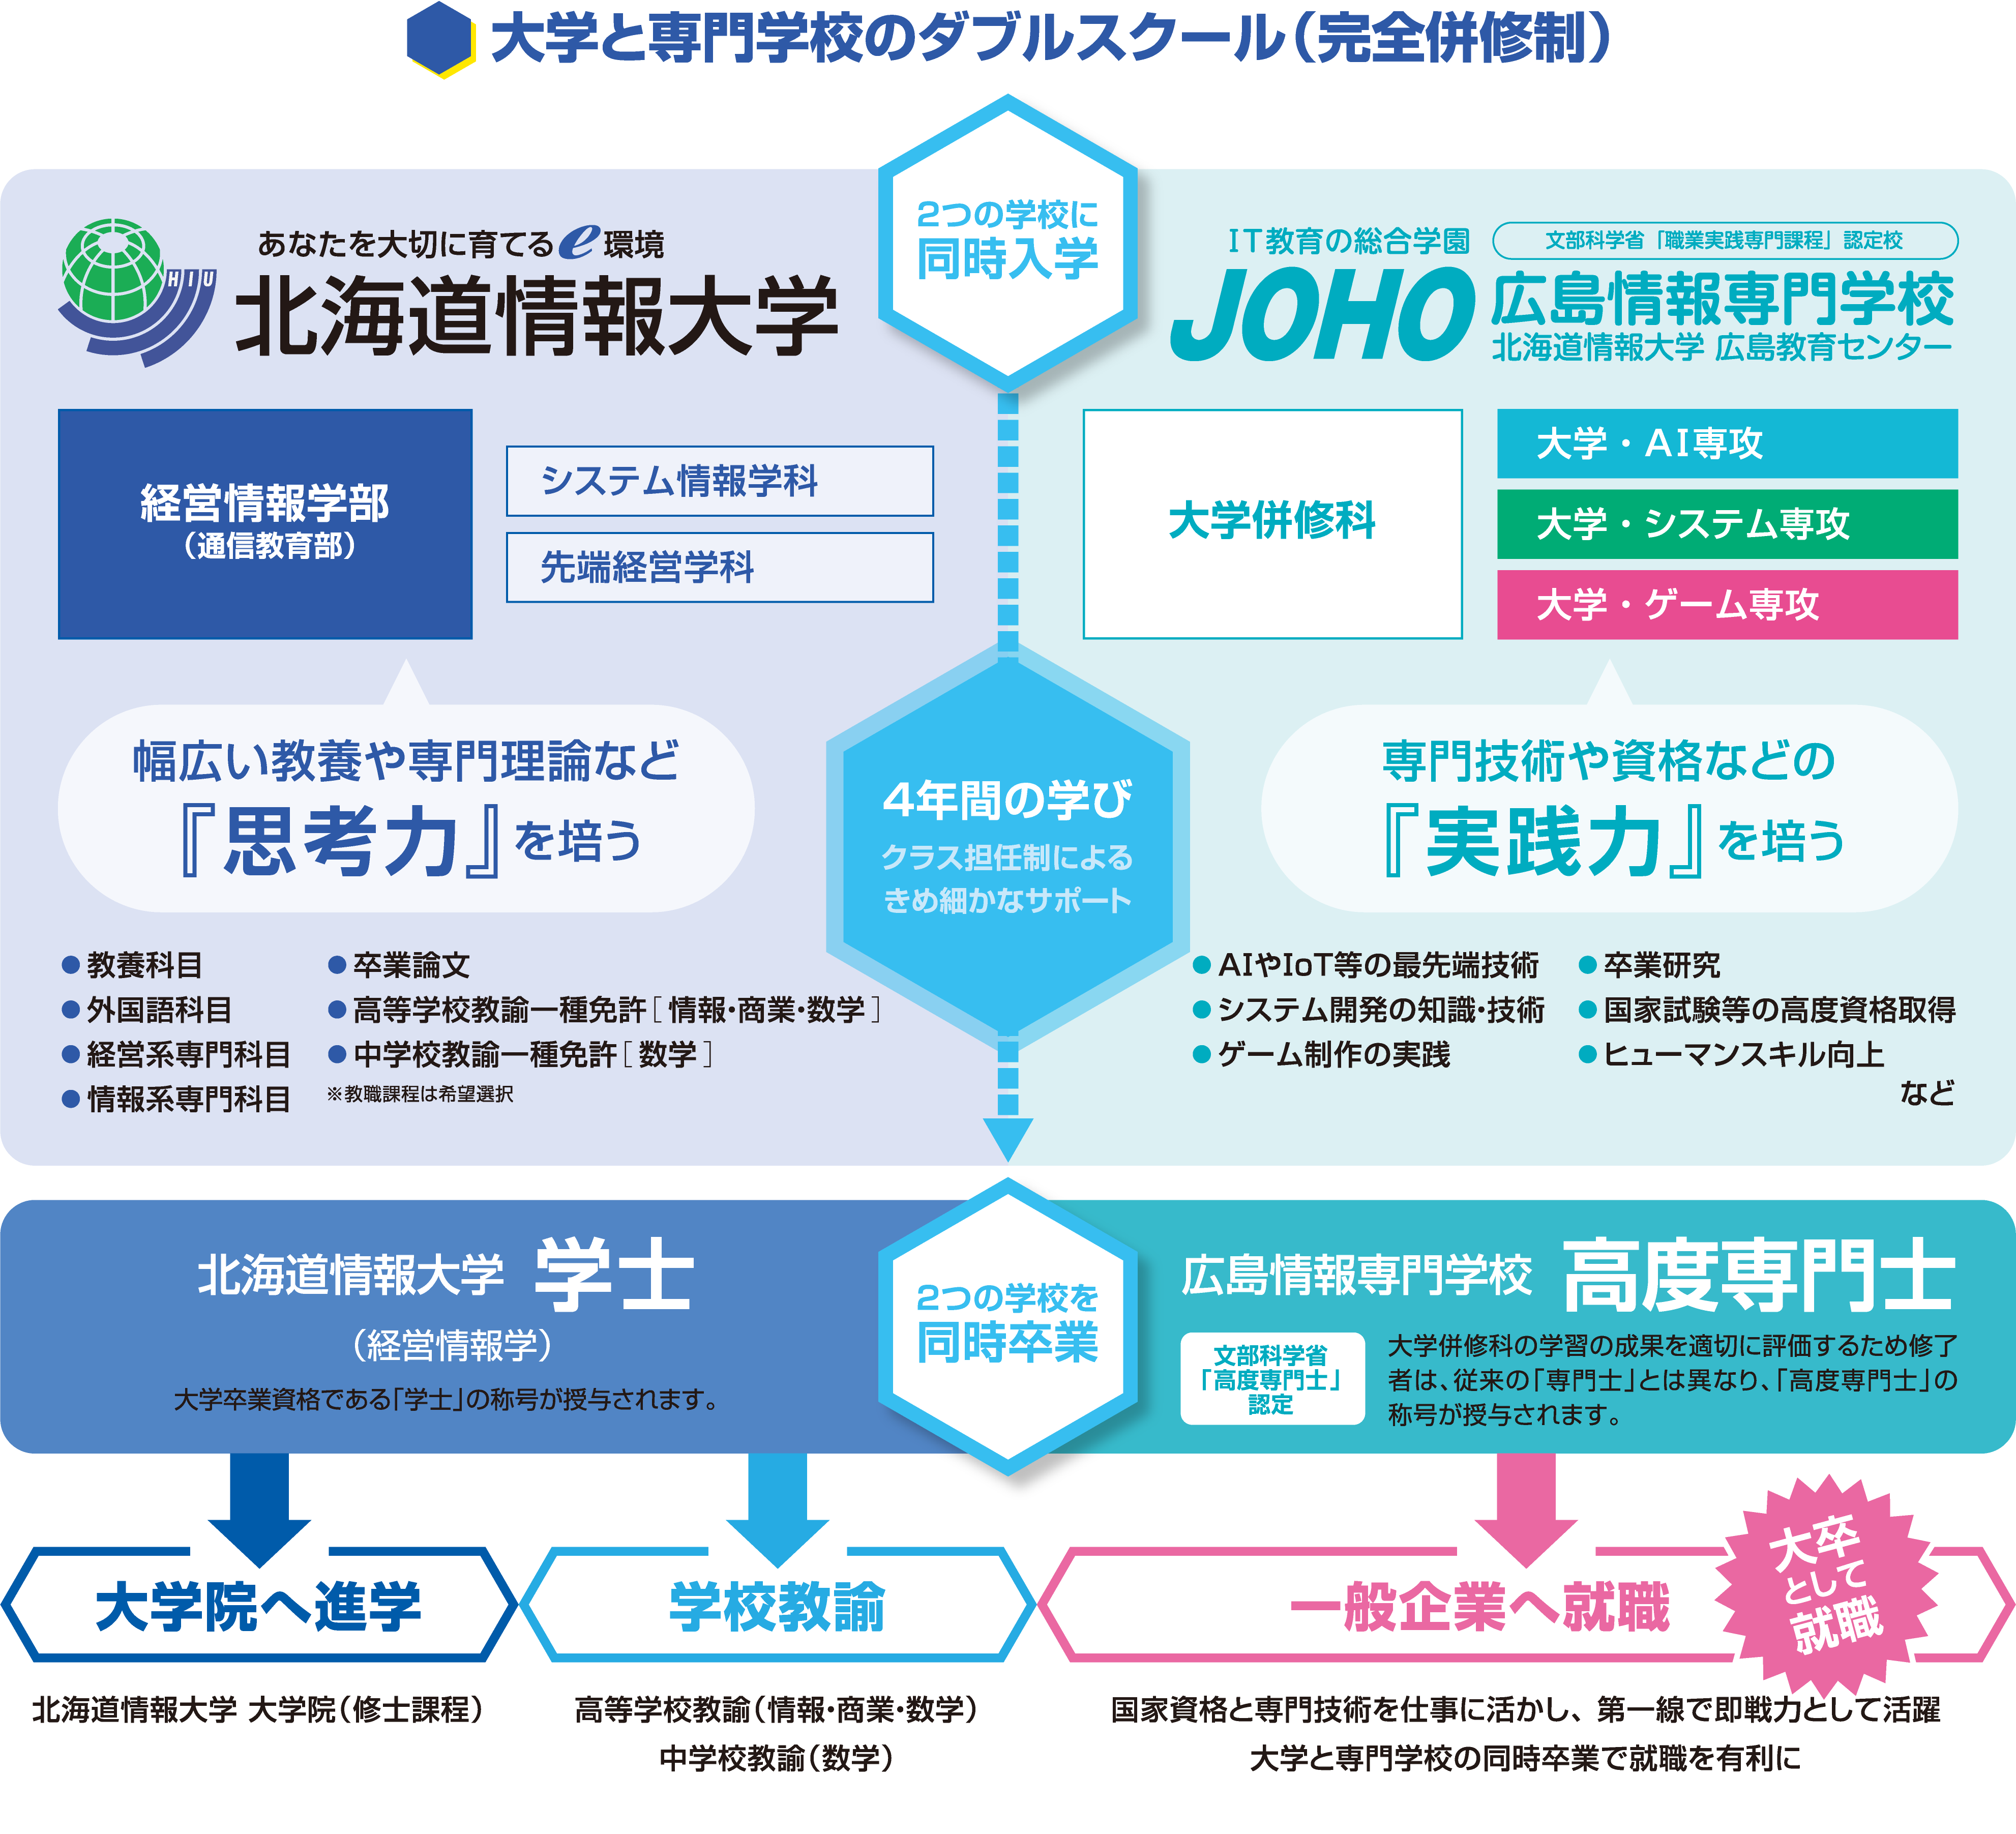 北海道情報大学と広島情報専門学校、２つの学校に同時入学